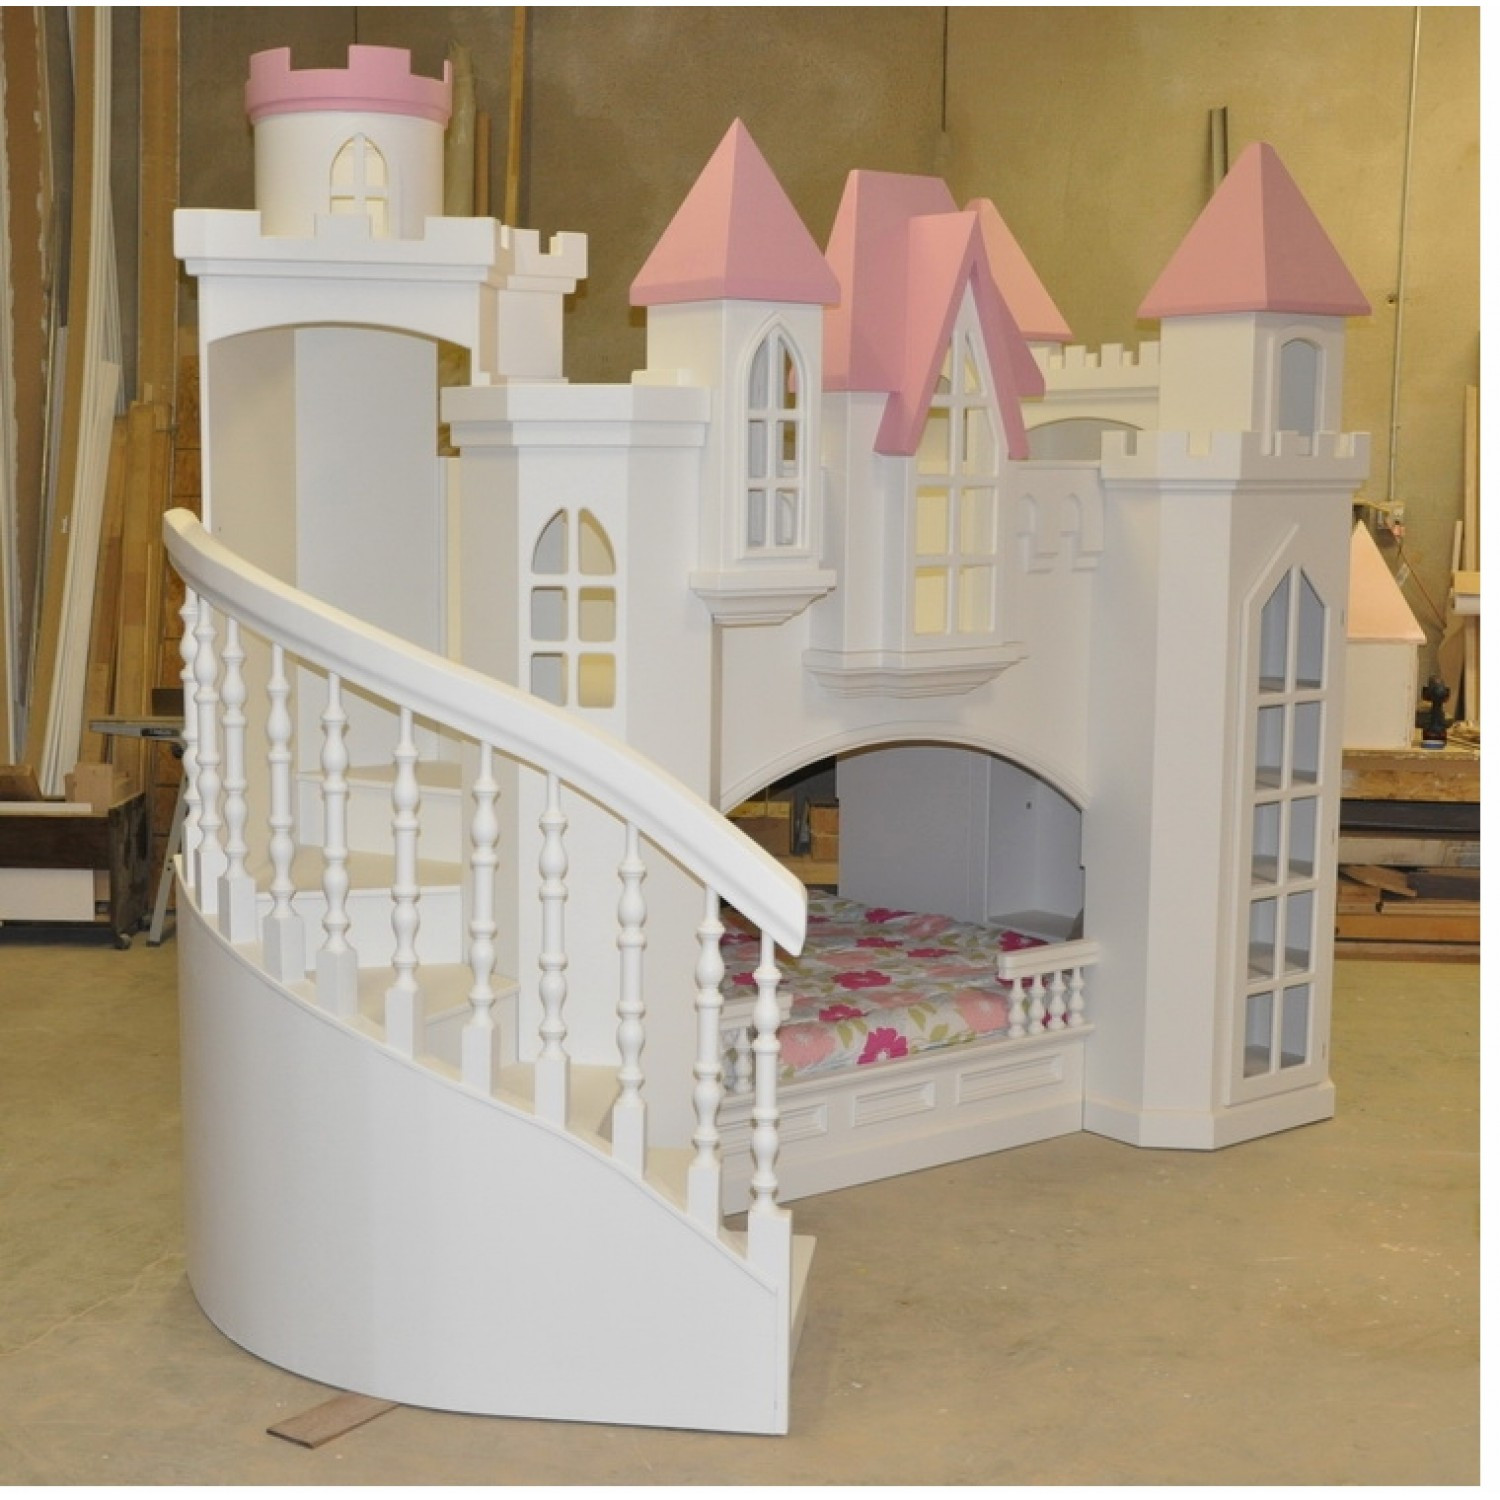 Best ideas about DIY Castle Bed
. Save or Pin Princess Castle Bed Plans Now.